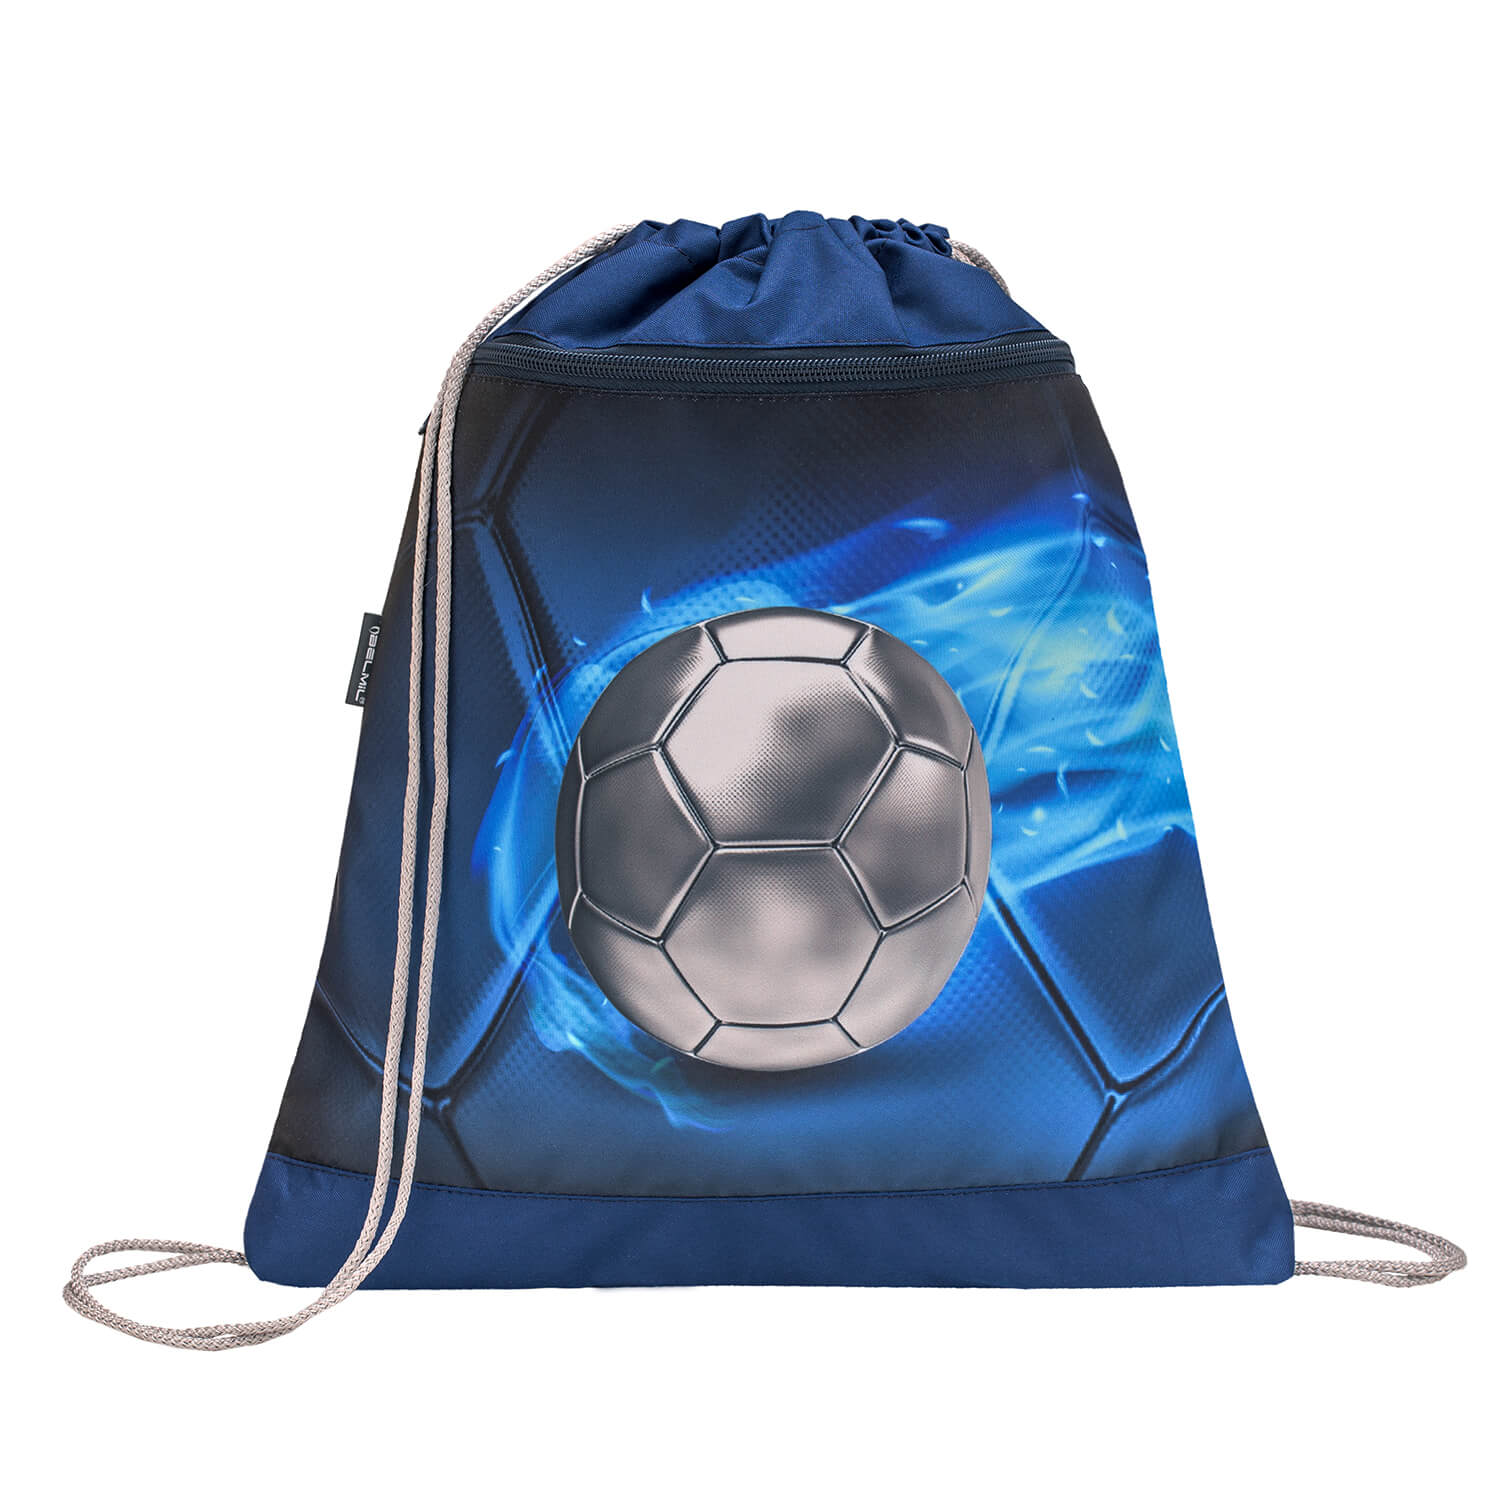 Classy Football 4 schoolbag set 4 pcs